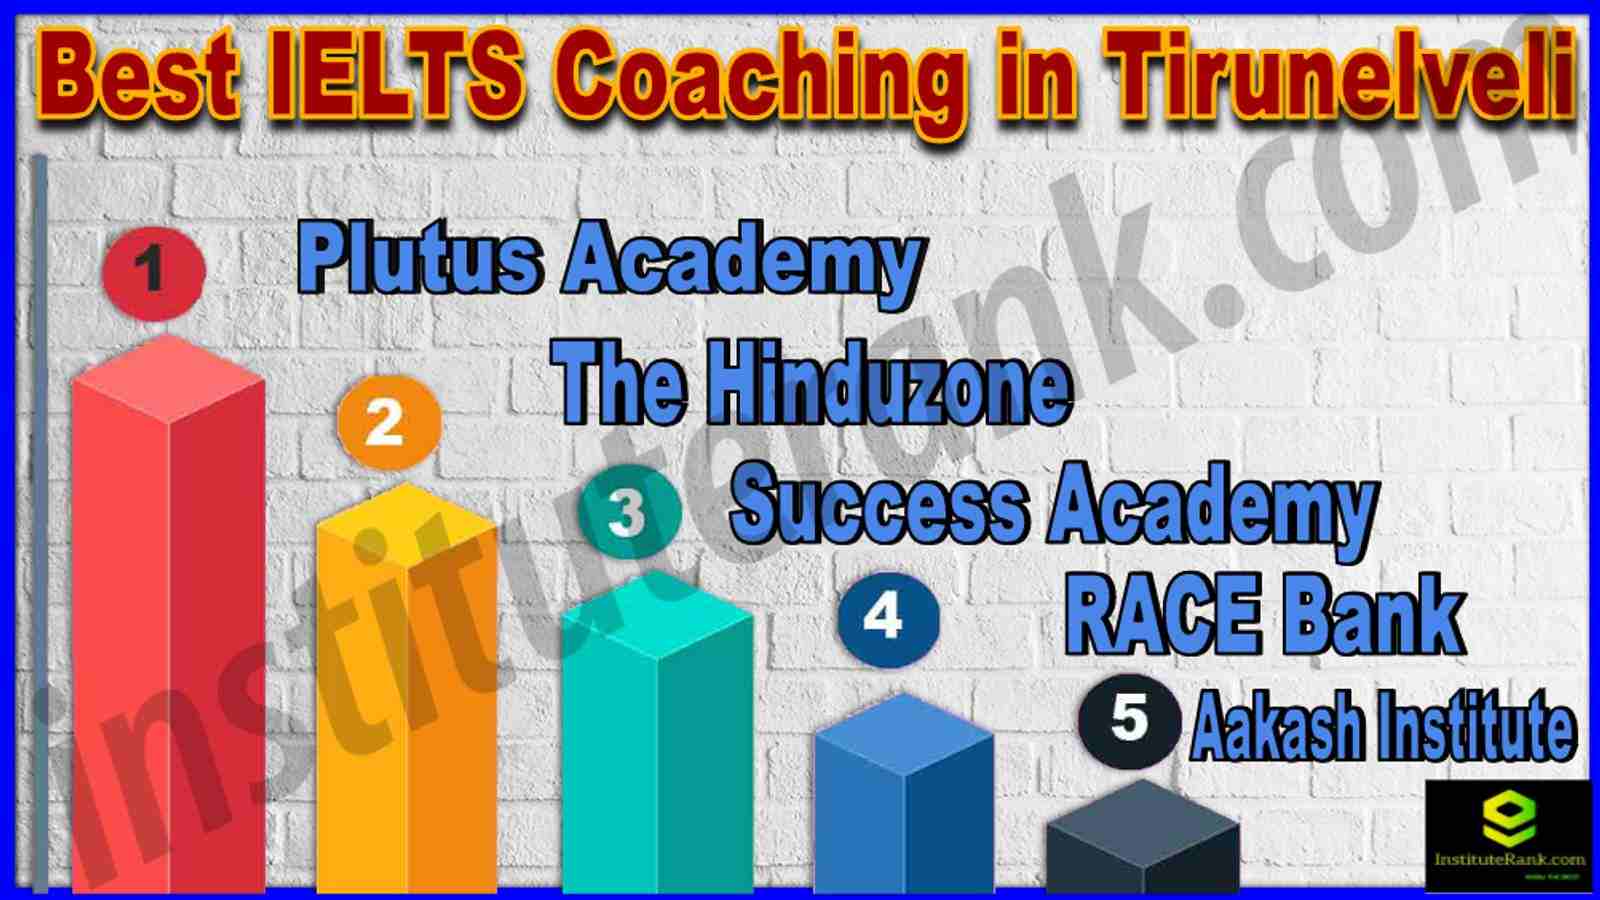 Best IELTS Coaching in Tirunelveli